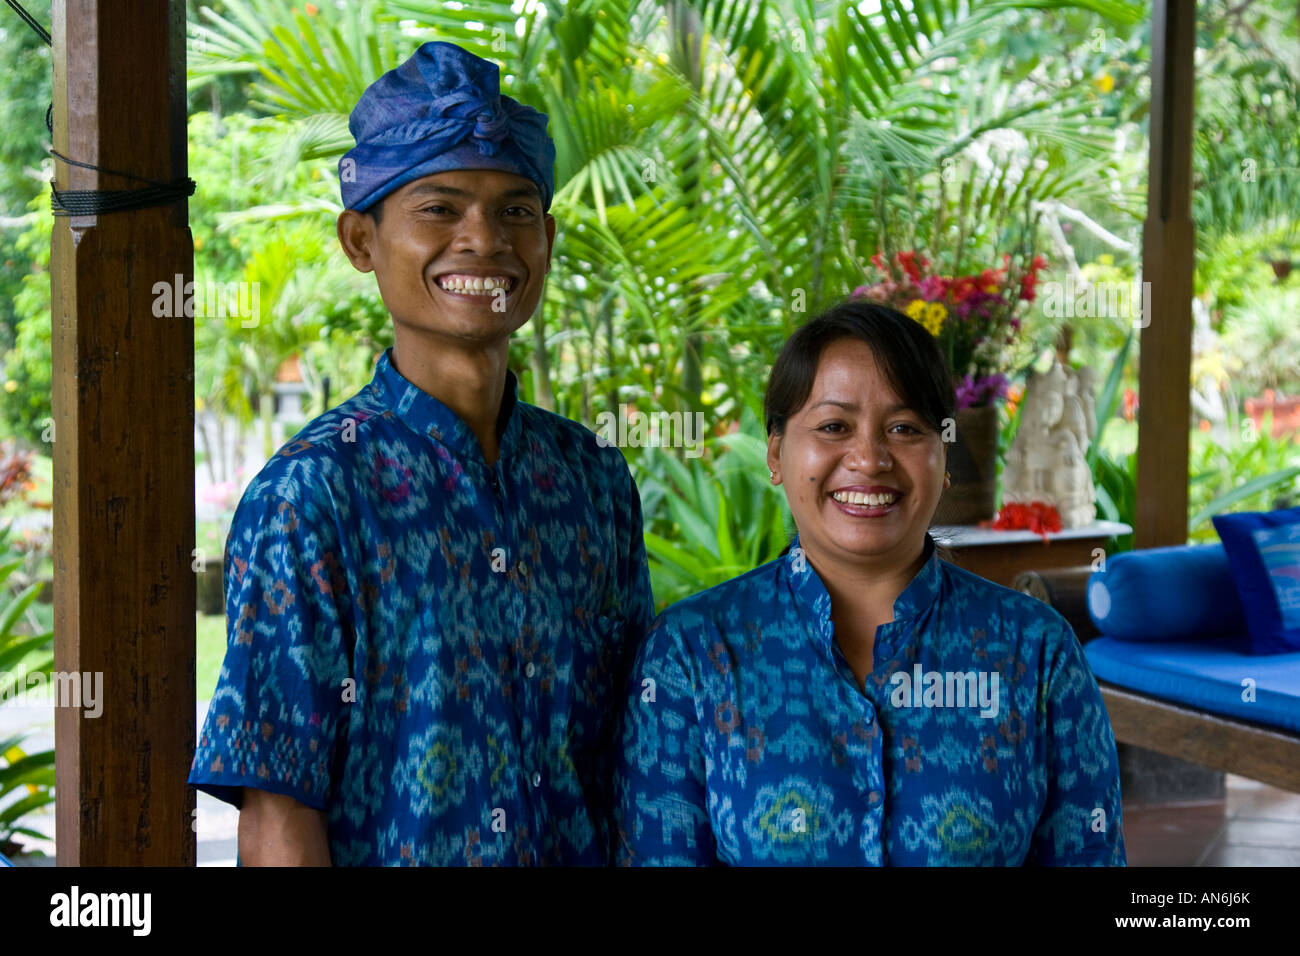 Smiling Staff at Alam Shanti an Upscale Hotel in Ubud Bali Indonesia Stock Photo